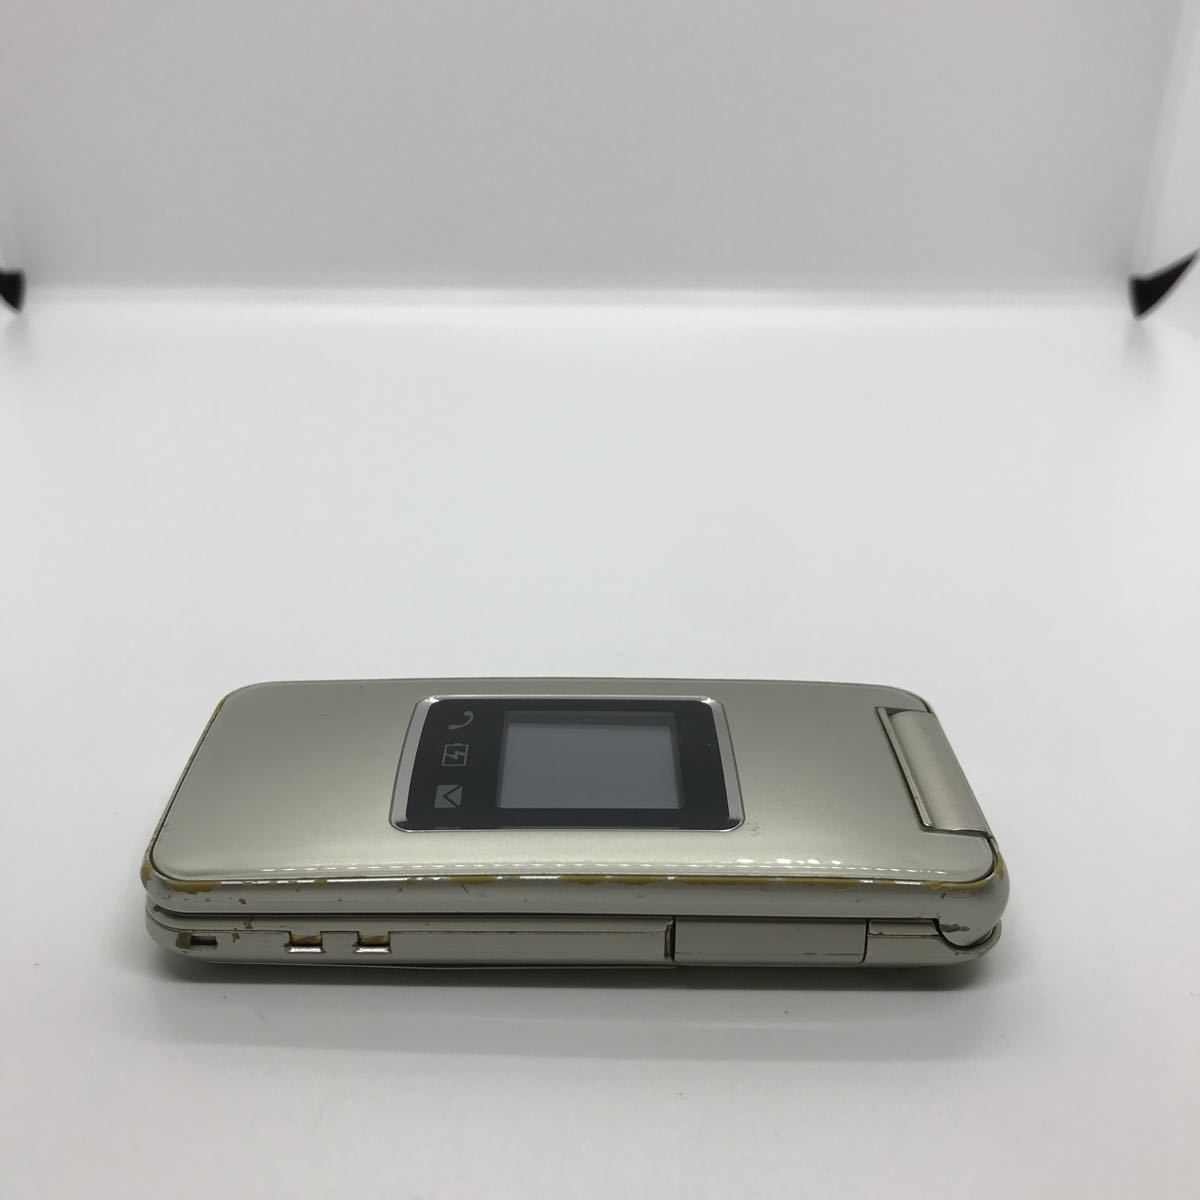 SoftBank ソフトバンク 108SH SHARP ガラケー 携帯電話 b19f59sm